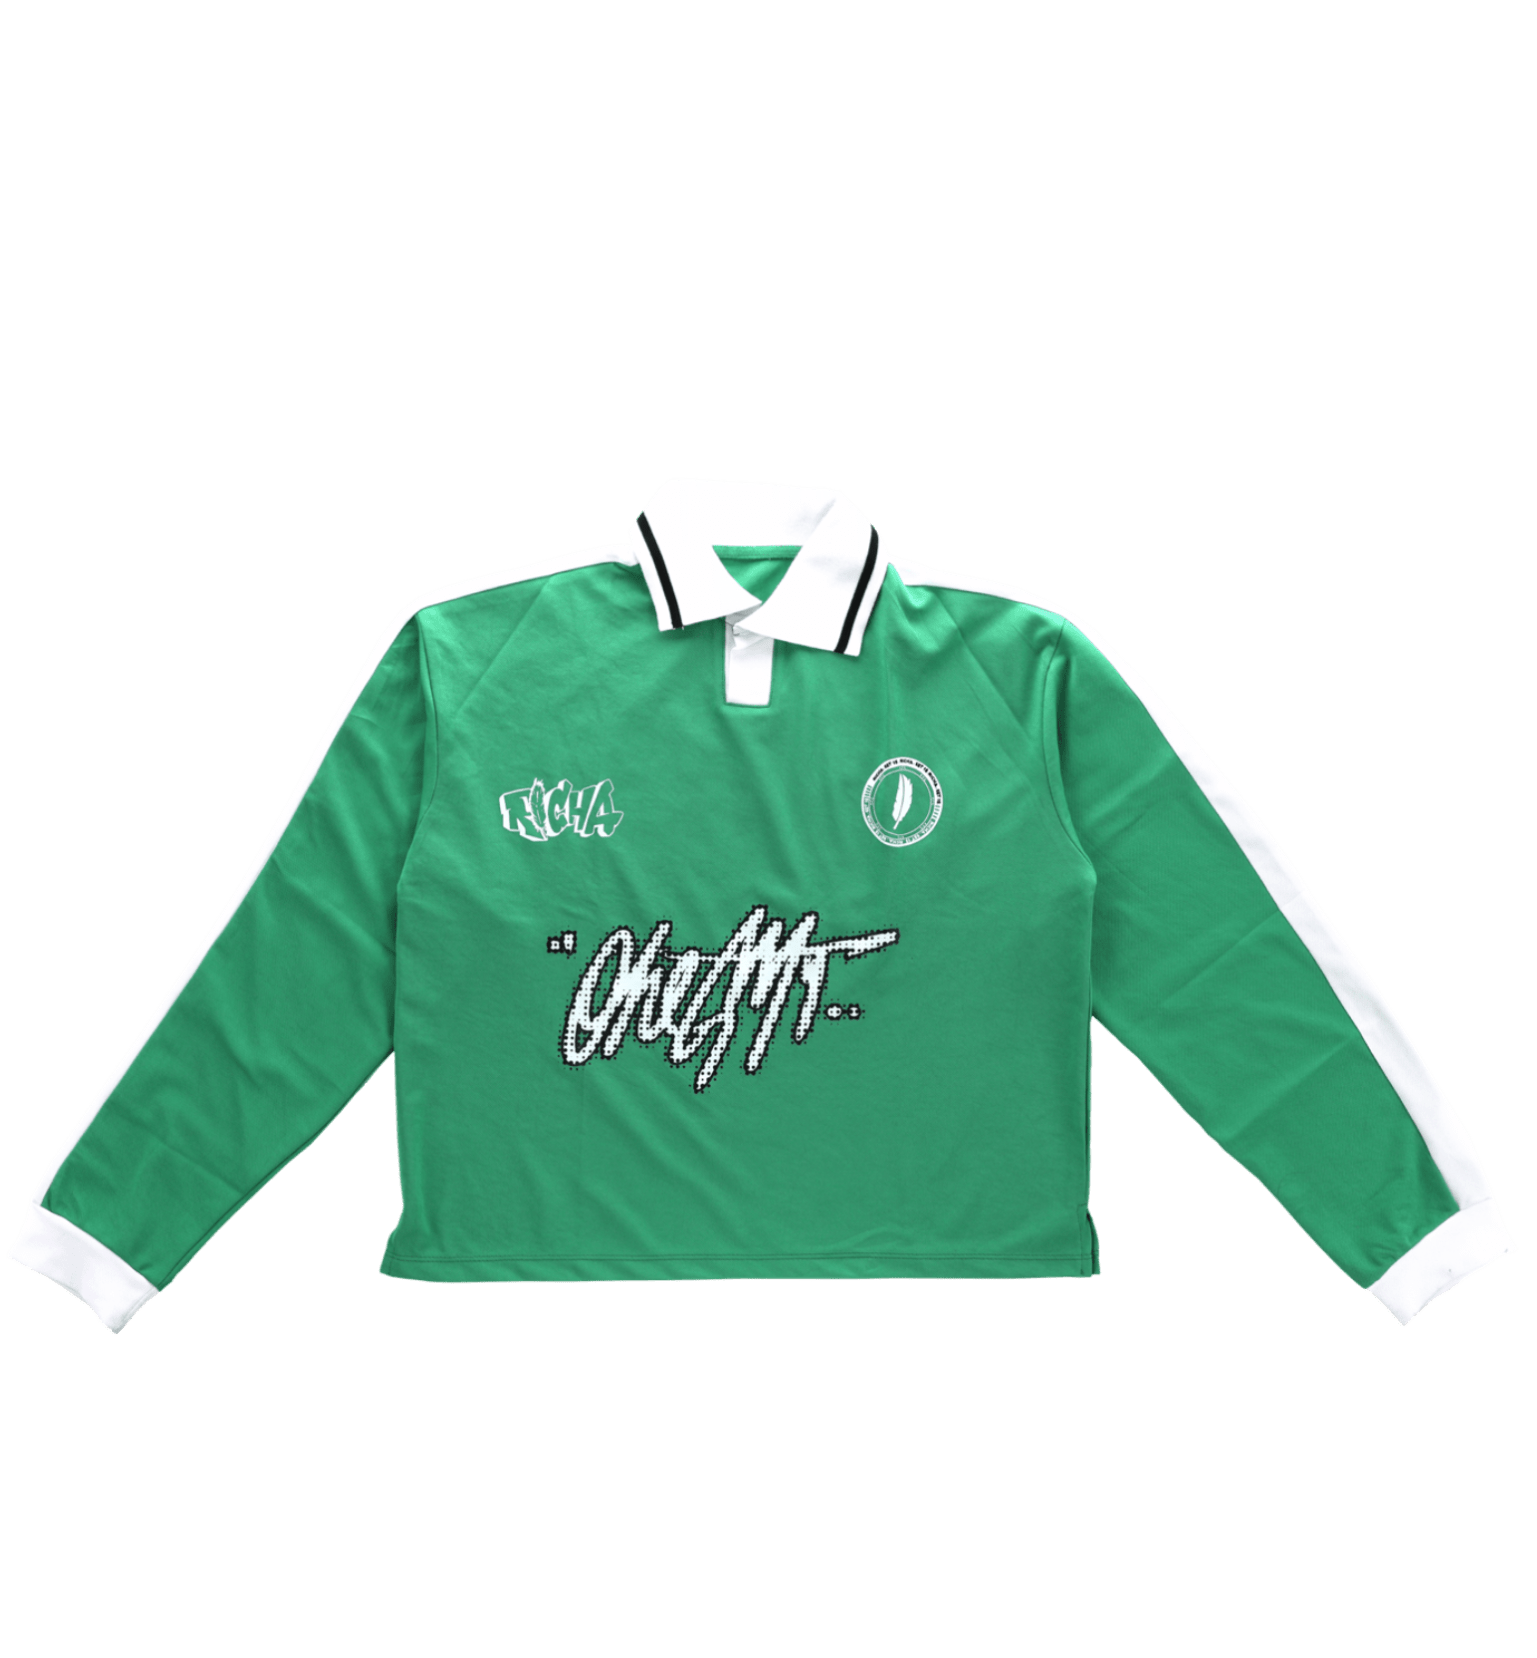 RICHA F.C. Jersey - GREEN/WHITE LS